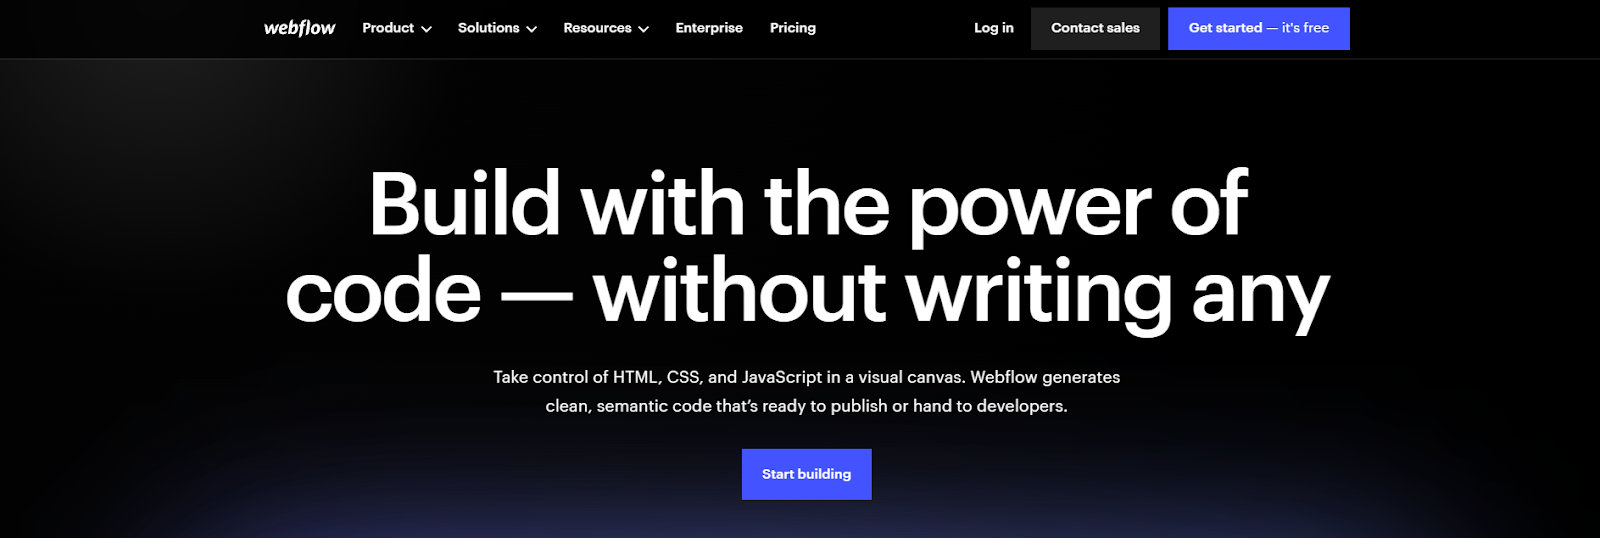 A screenshot of Webflow's home page 